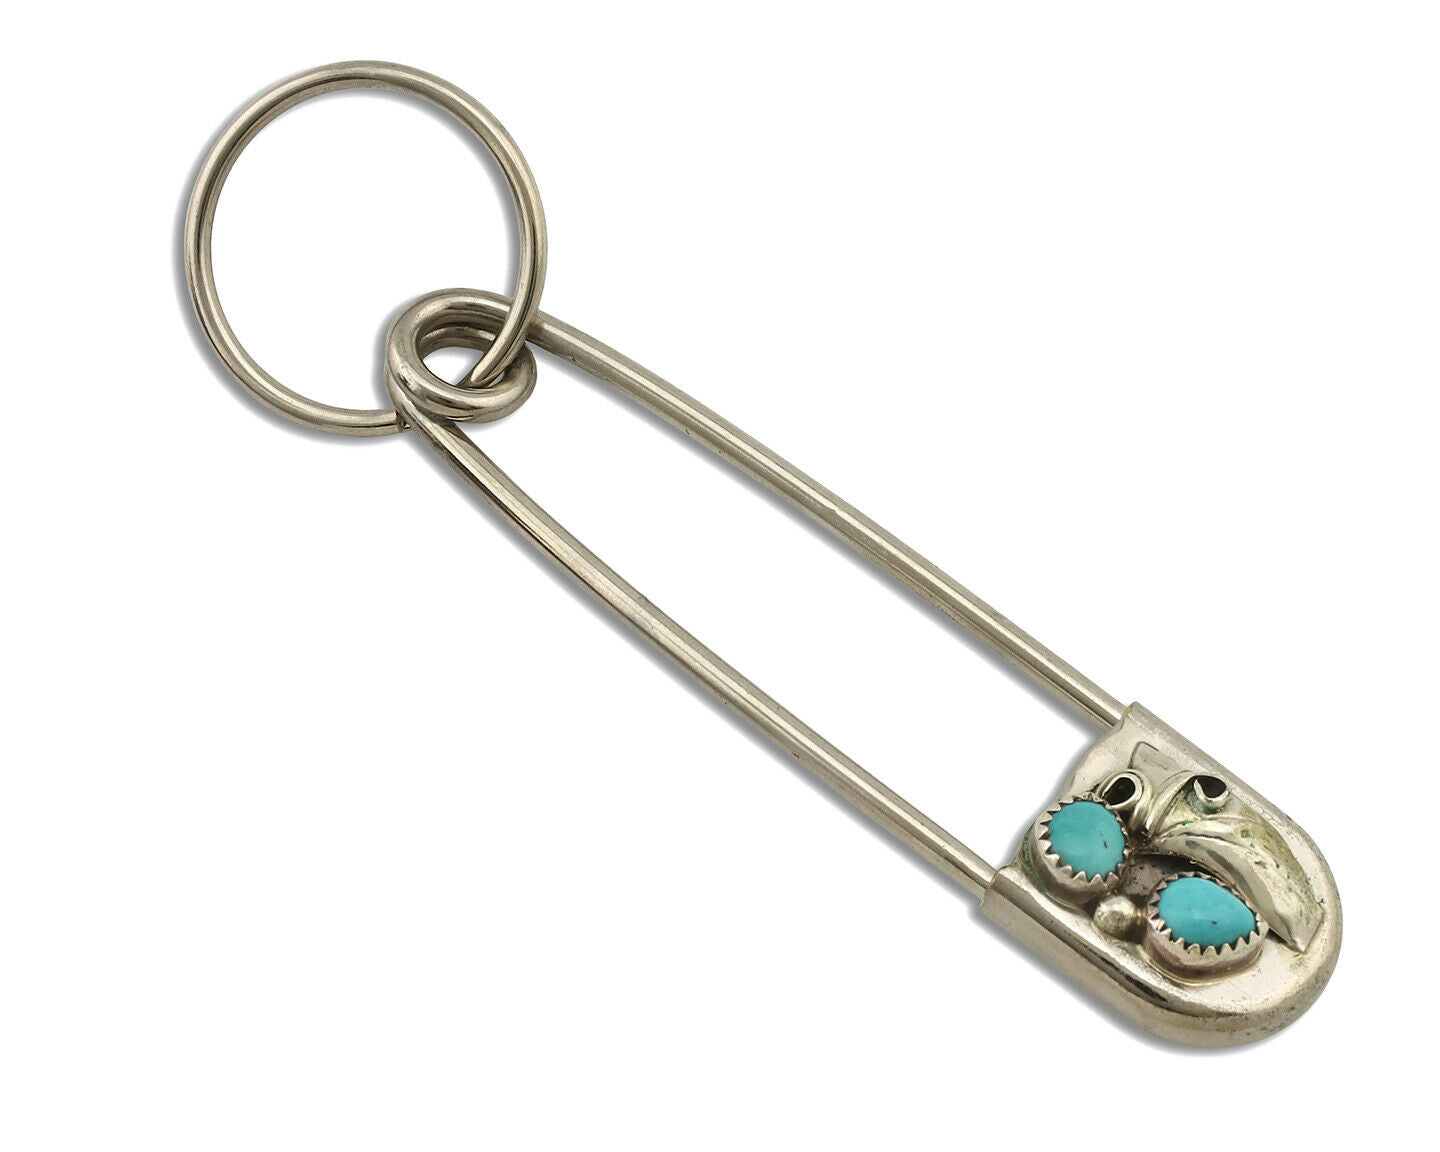 Navajo Handmade Key Chain .925 Silver Blue Turquoise Native American Artist C80s